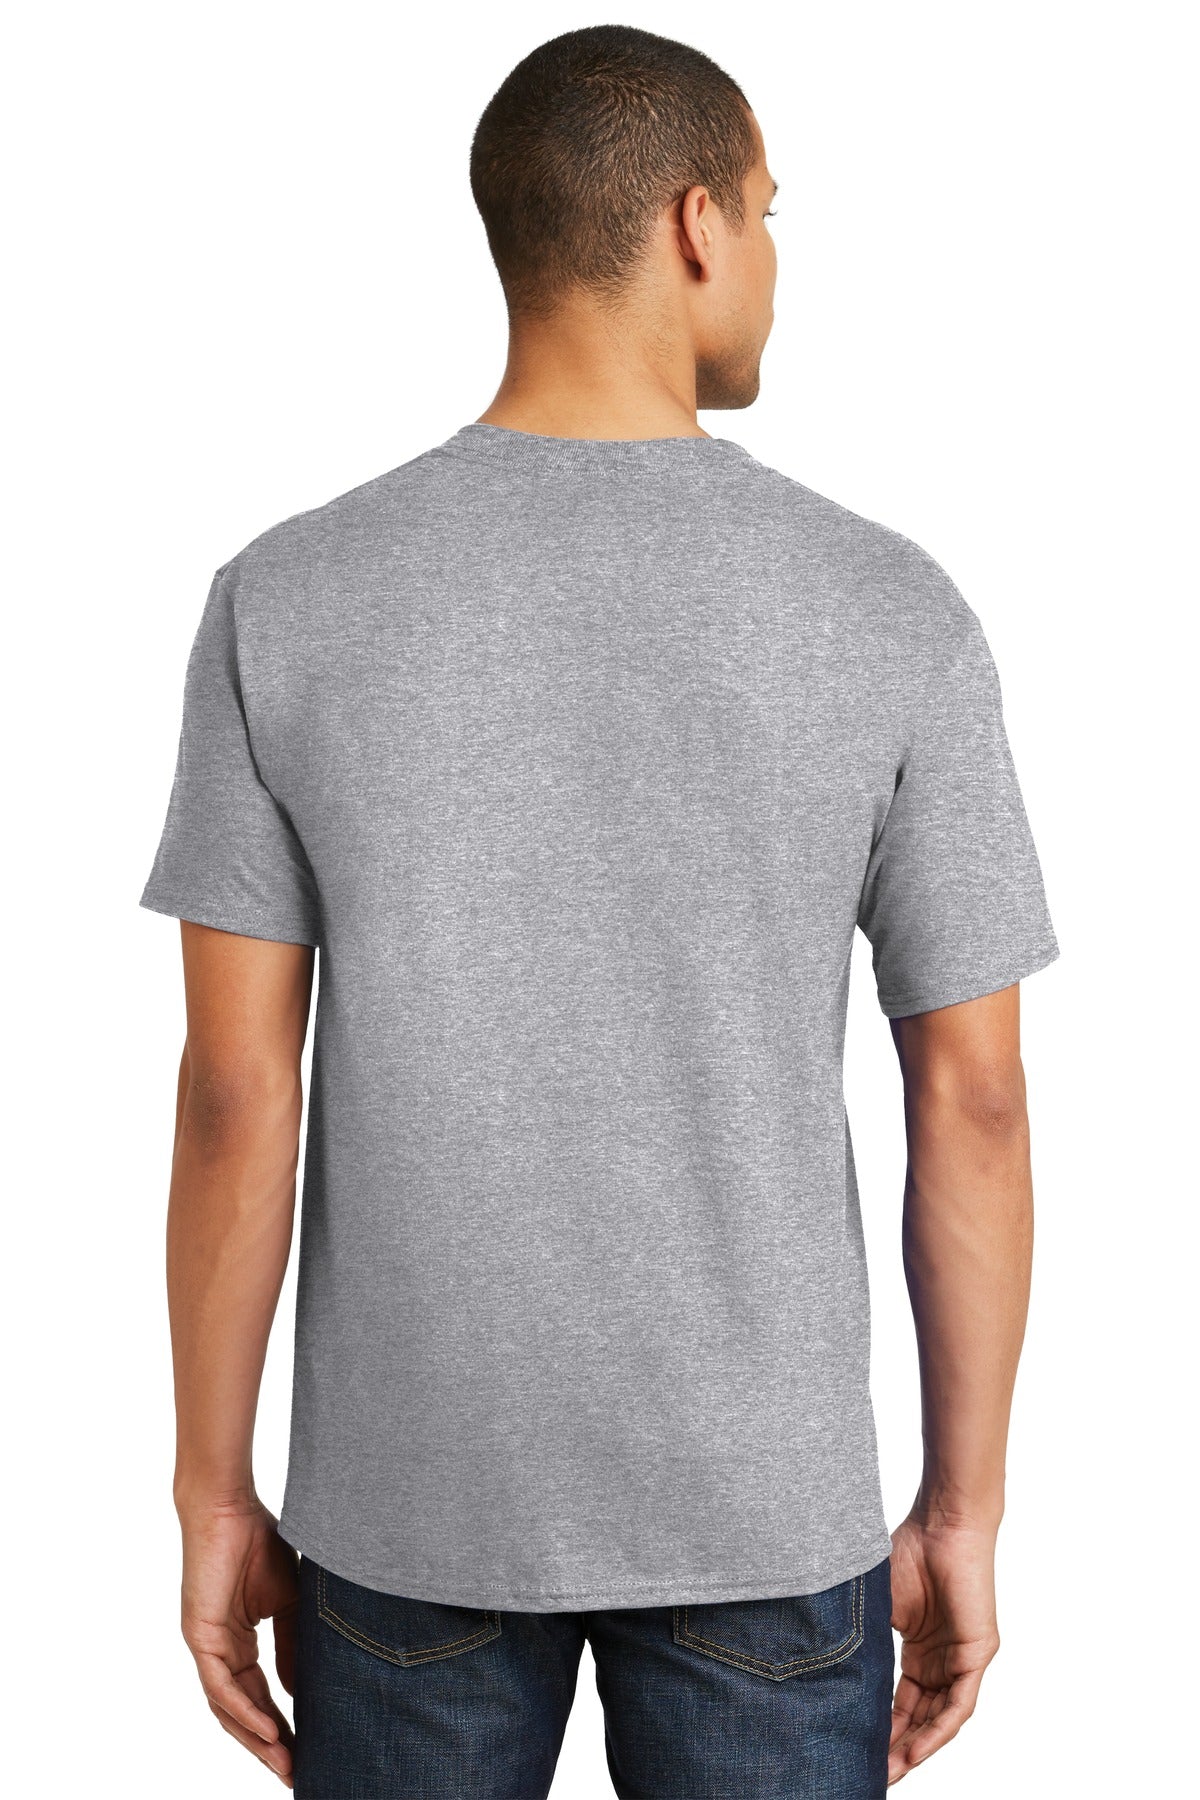 Hanes® Beefy-T® - 100% Cotton T-Shirt. 5180 [Light Steel] - DFW Impression